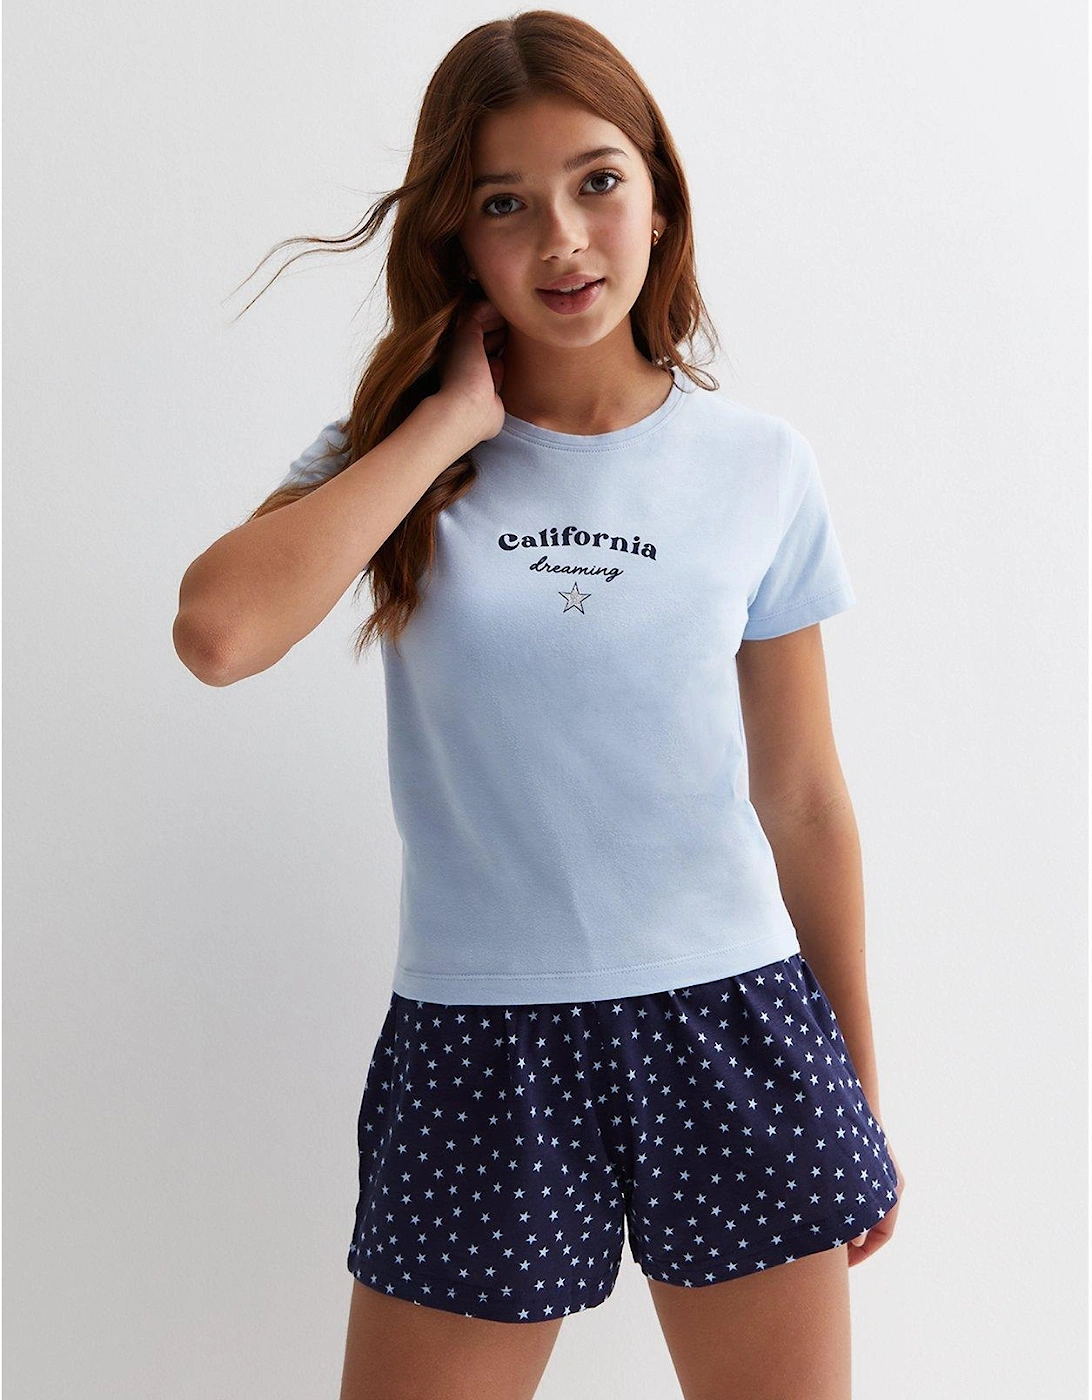 Girls Pale Blue Short Pyjama Set with California Dreaming Logo, 2 of 1